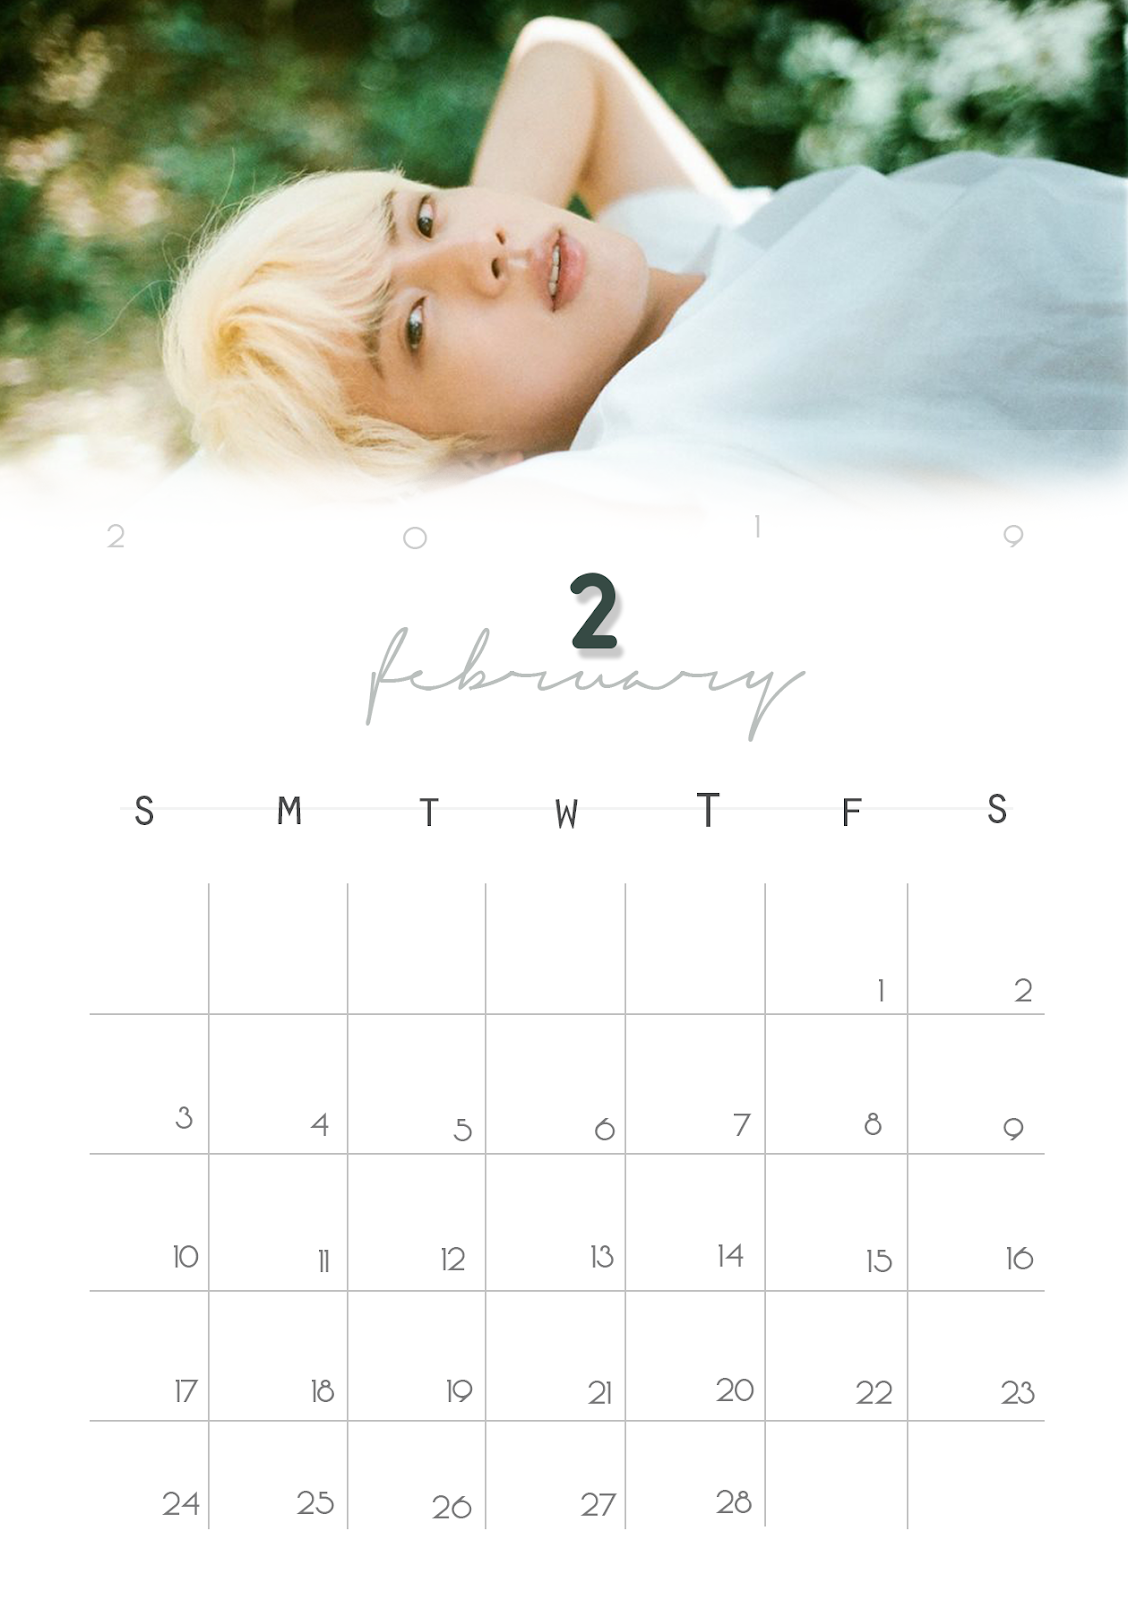 FREE] Printable BTS Calendar 2019 | DANDELIYONG